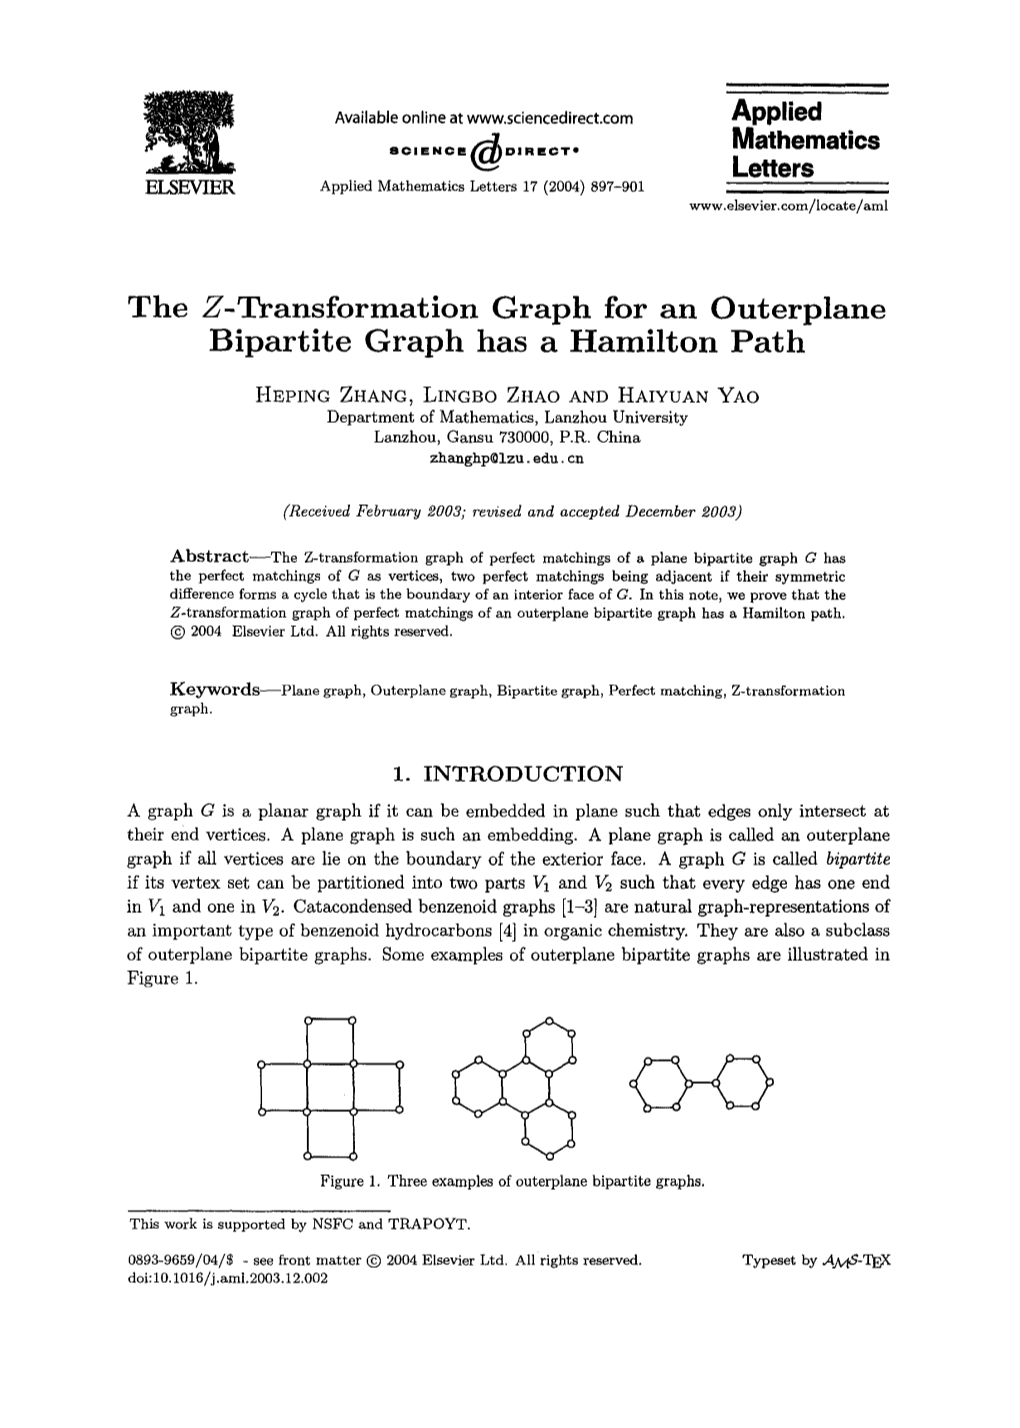 The Z-Transformation Graph for an Outerplane Bipartite Graph Has a Hamilton Path